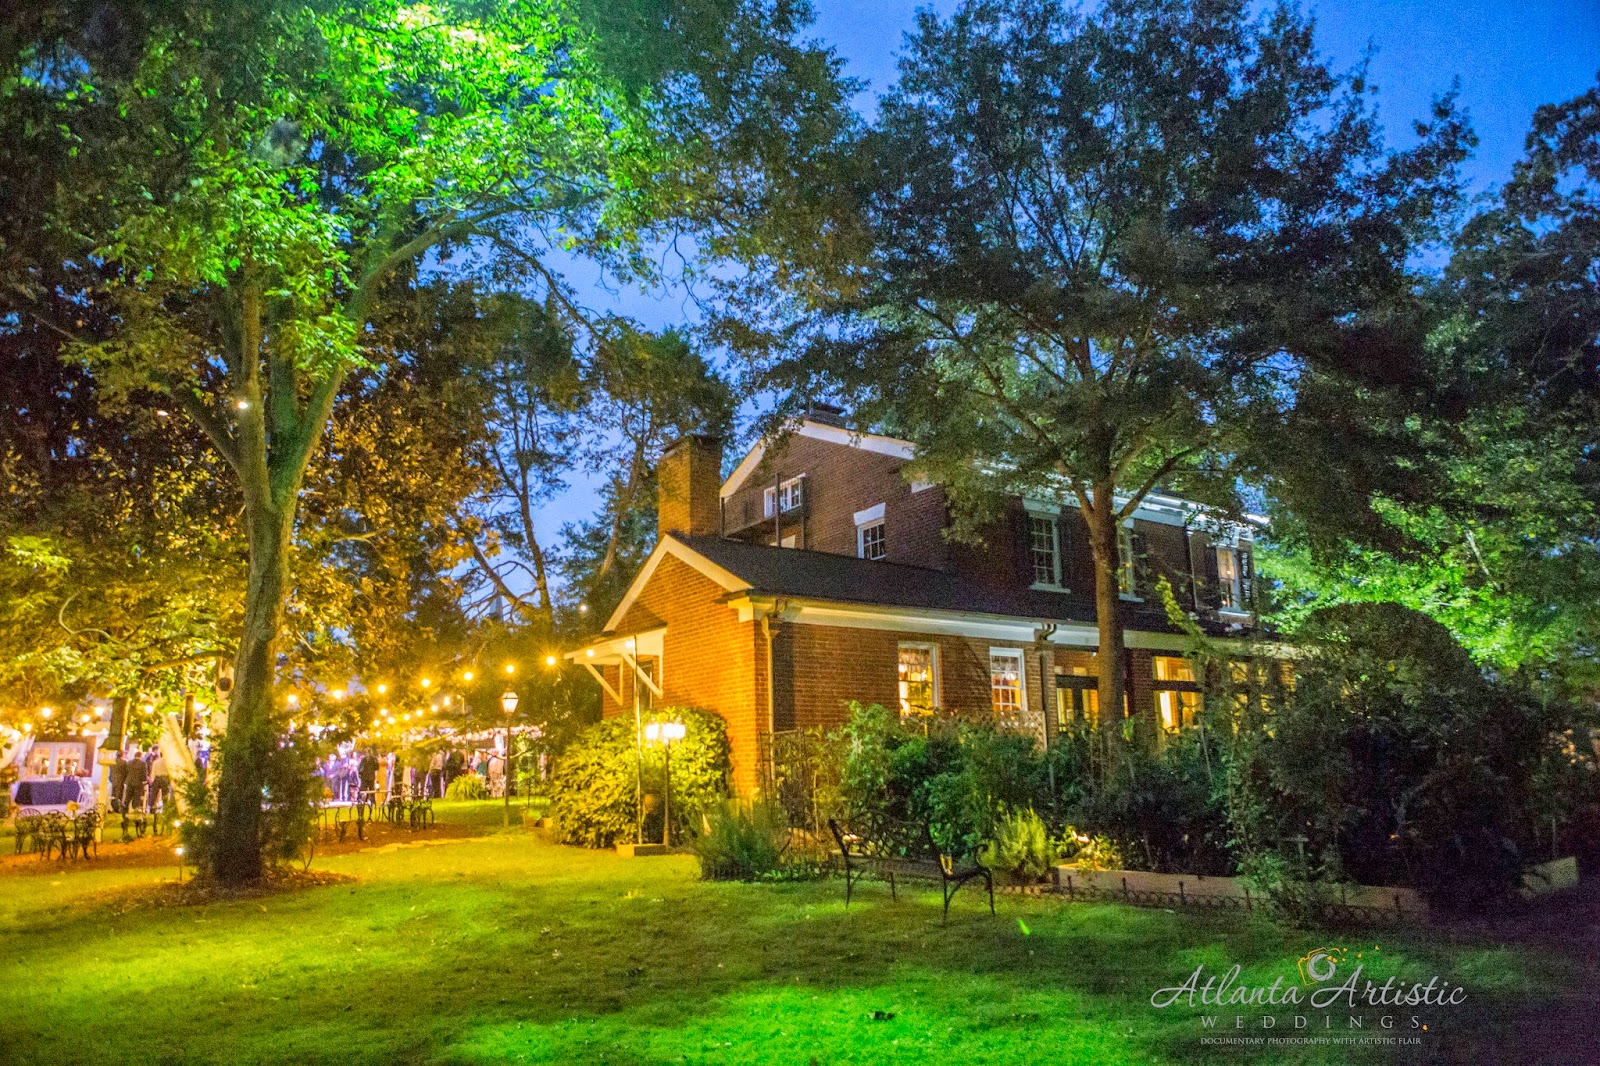 Historic Wedding Venue The Gardens At Great Oaks By Atlanta